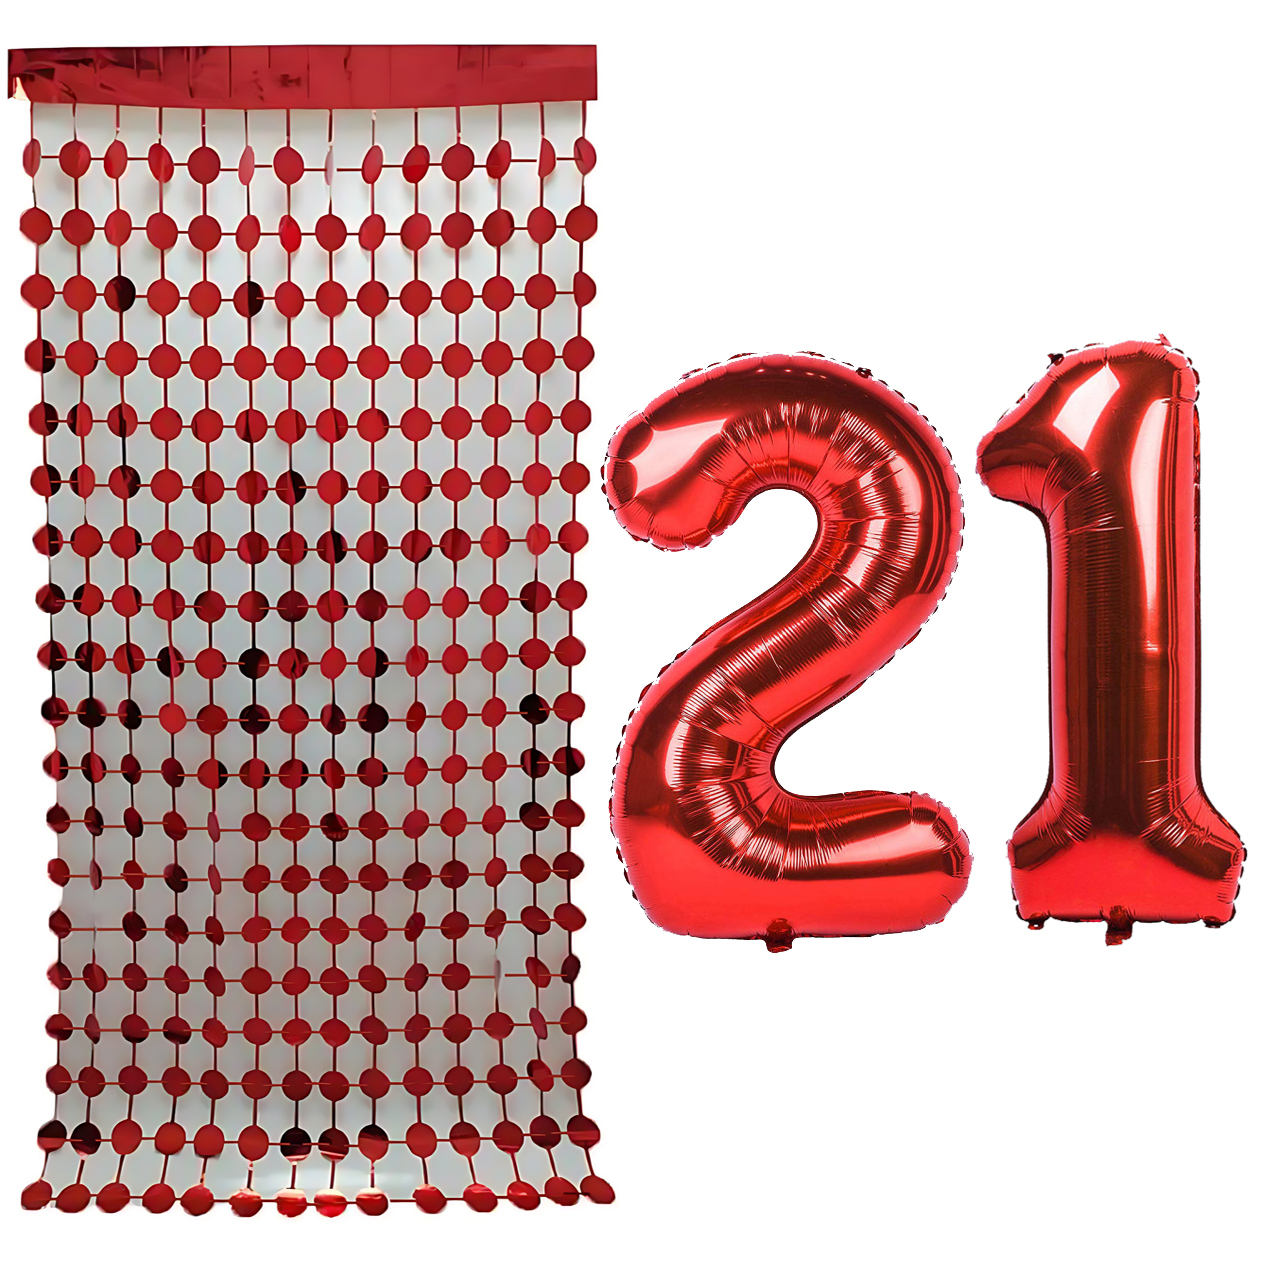 بادکنک فویلی مستر تم طرح عدد 21 به همراه ریسه تزئینی بسته 3 عددی